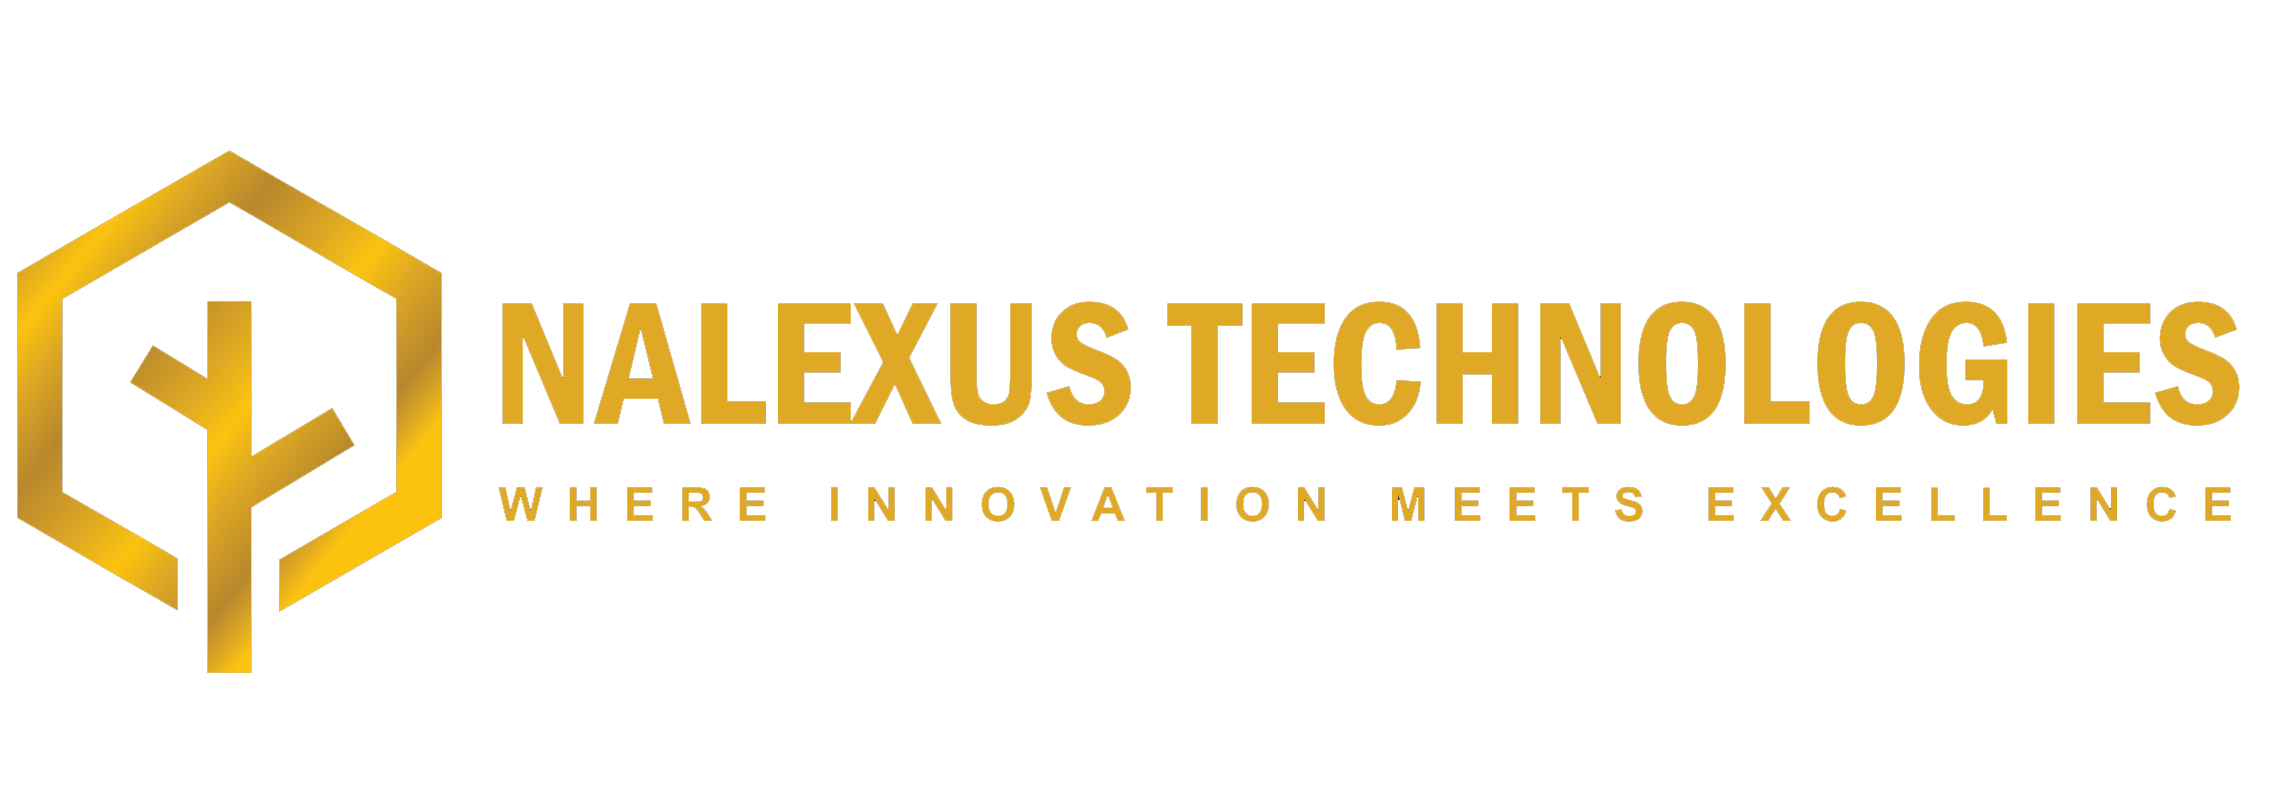 Nalexus Technologies